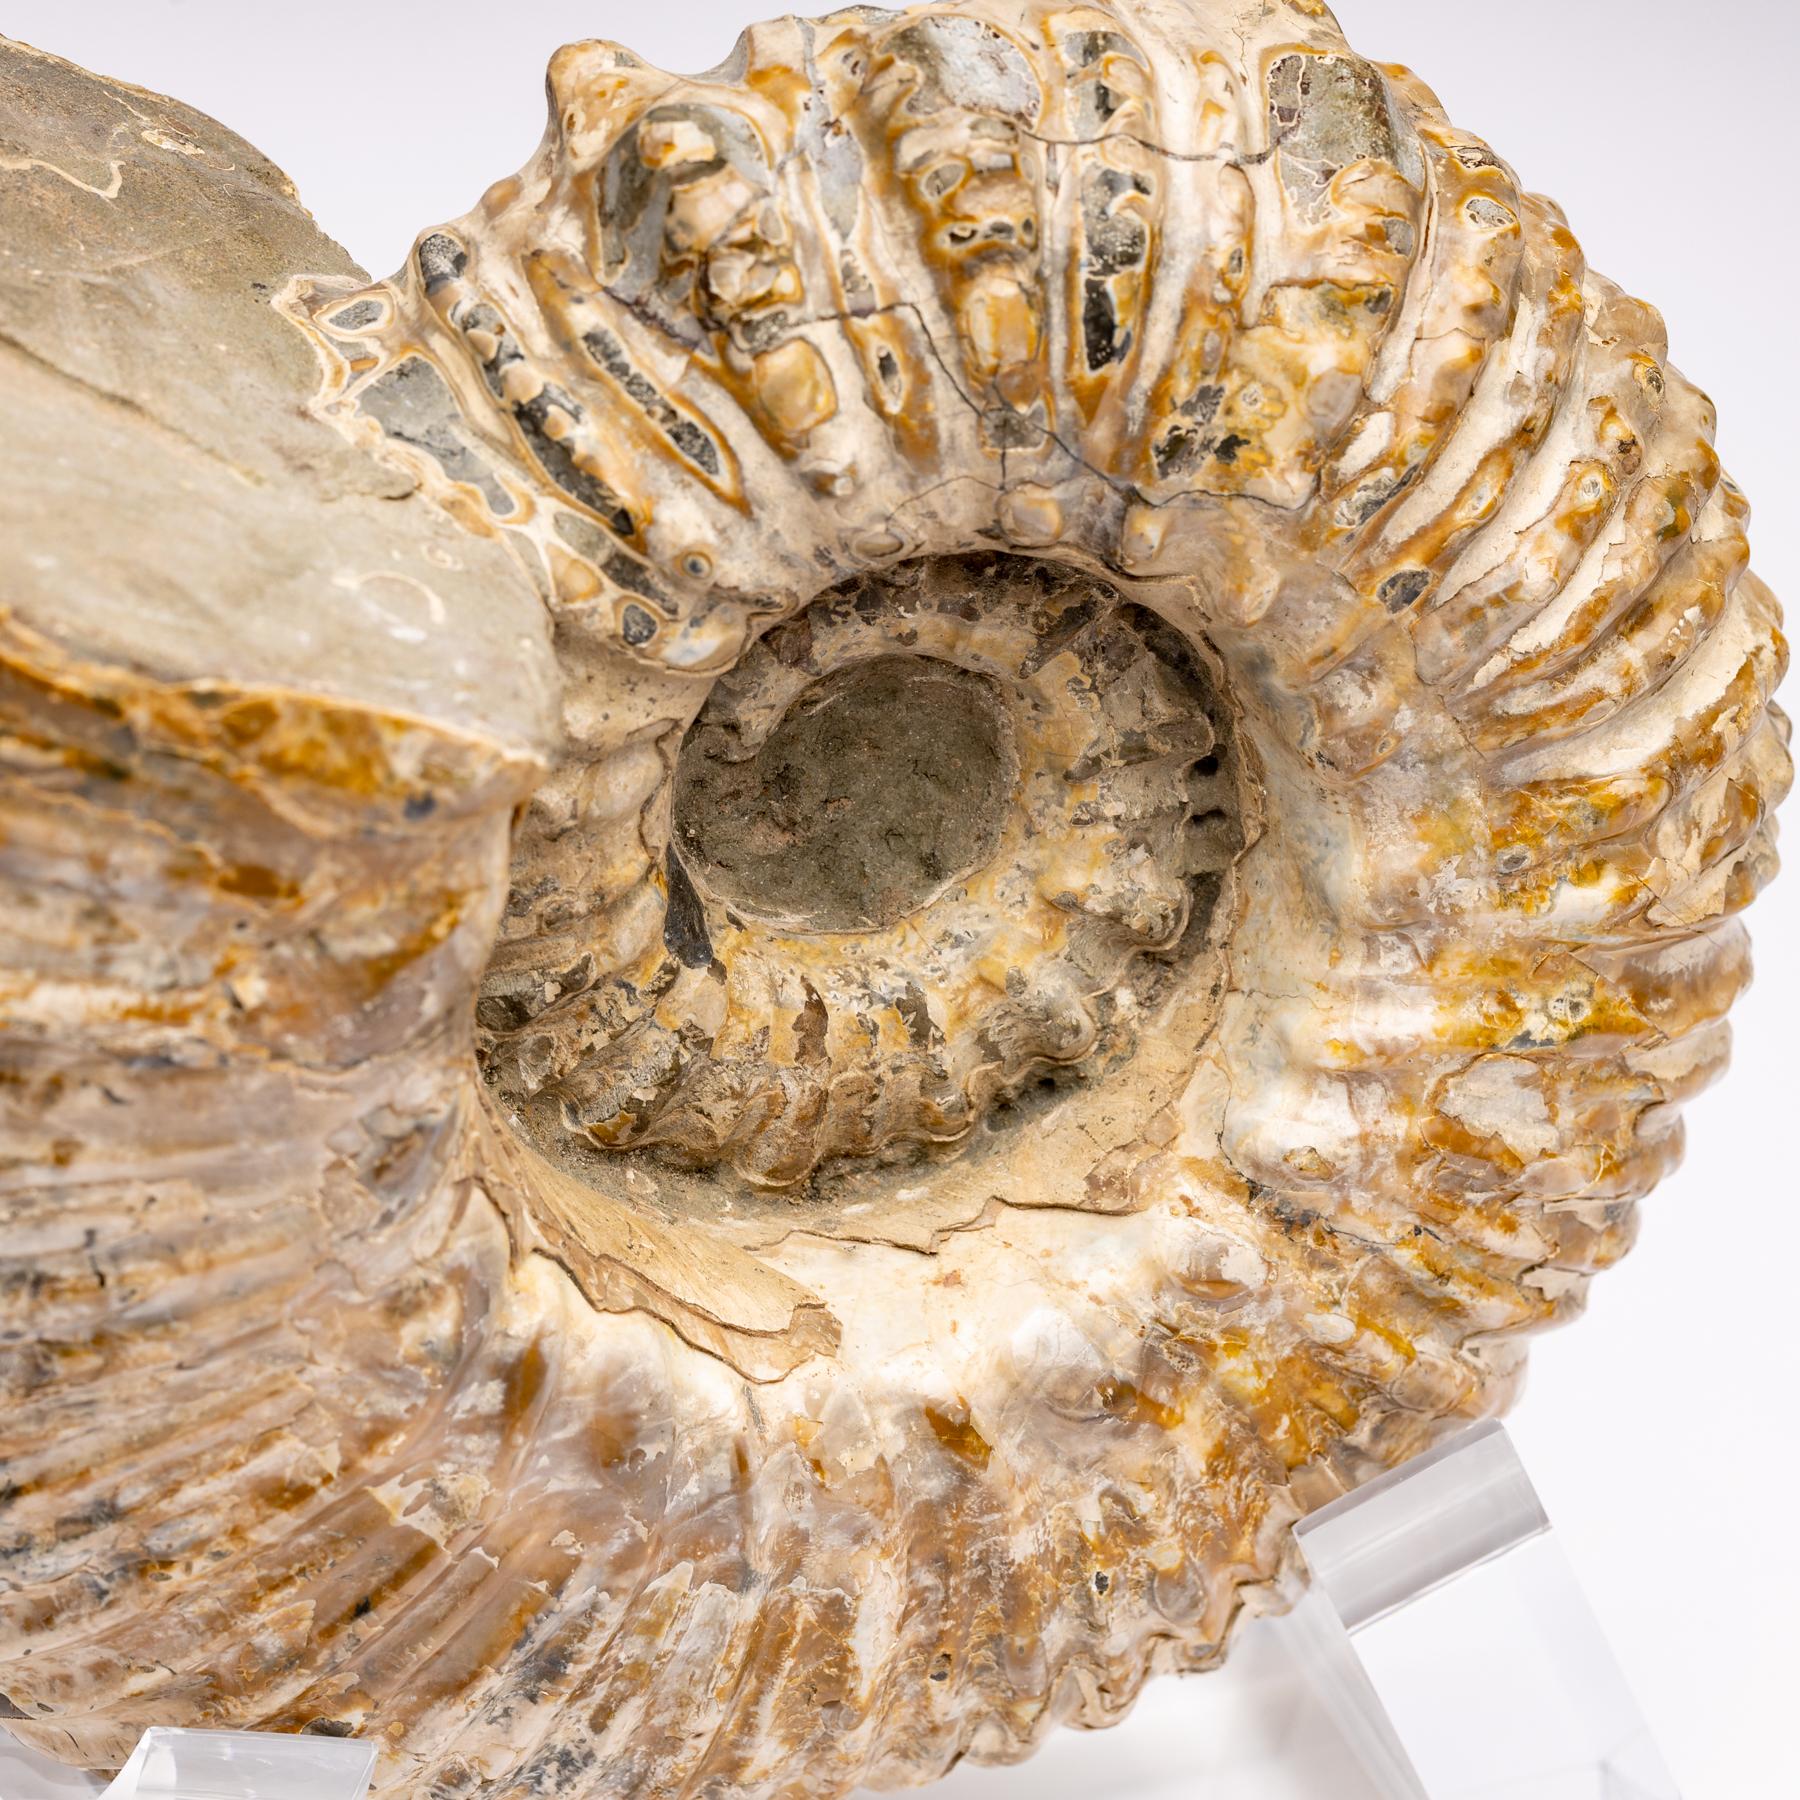 Mexican Madagascar Douvilleiceras Ammonite Fossil on Acrylic Base, Cretaceous Period